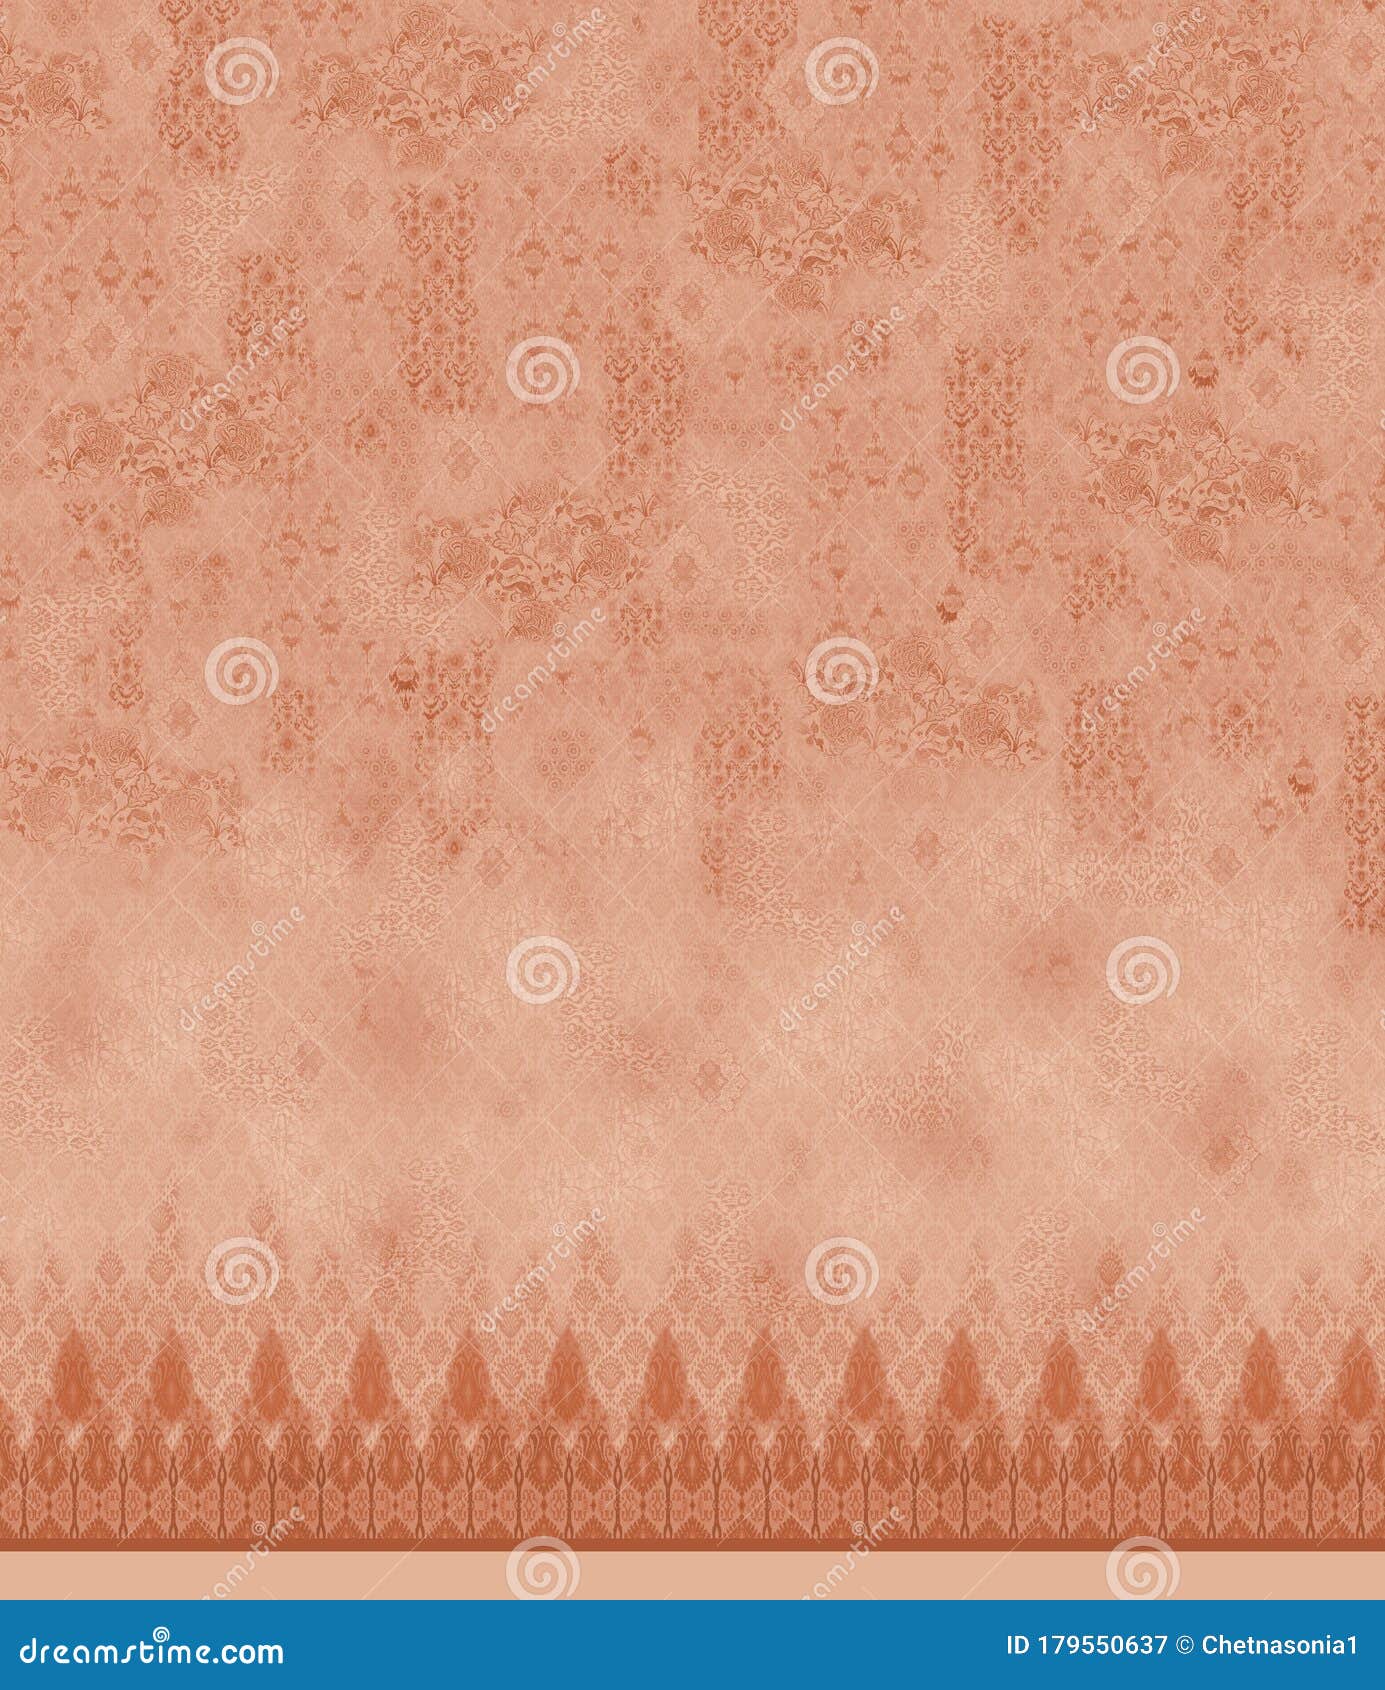 Suit Kurti Digital Design Motif Texture Wallpaper Illustration Stock  Illustration - Illustration of romantic, tribal: 179550637